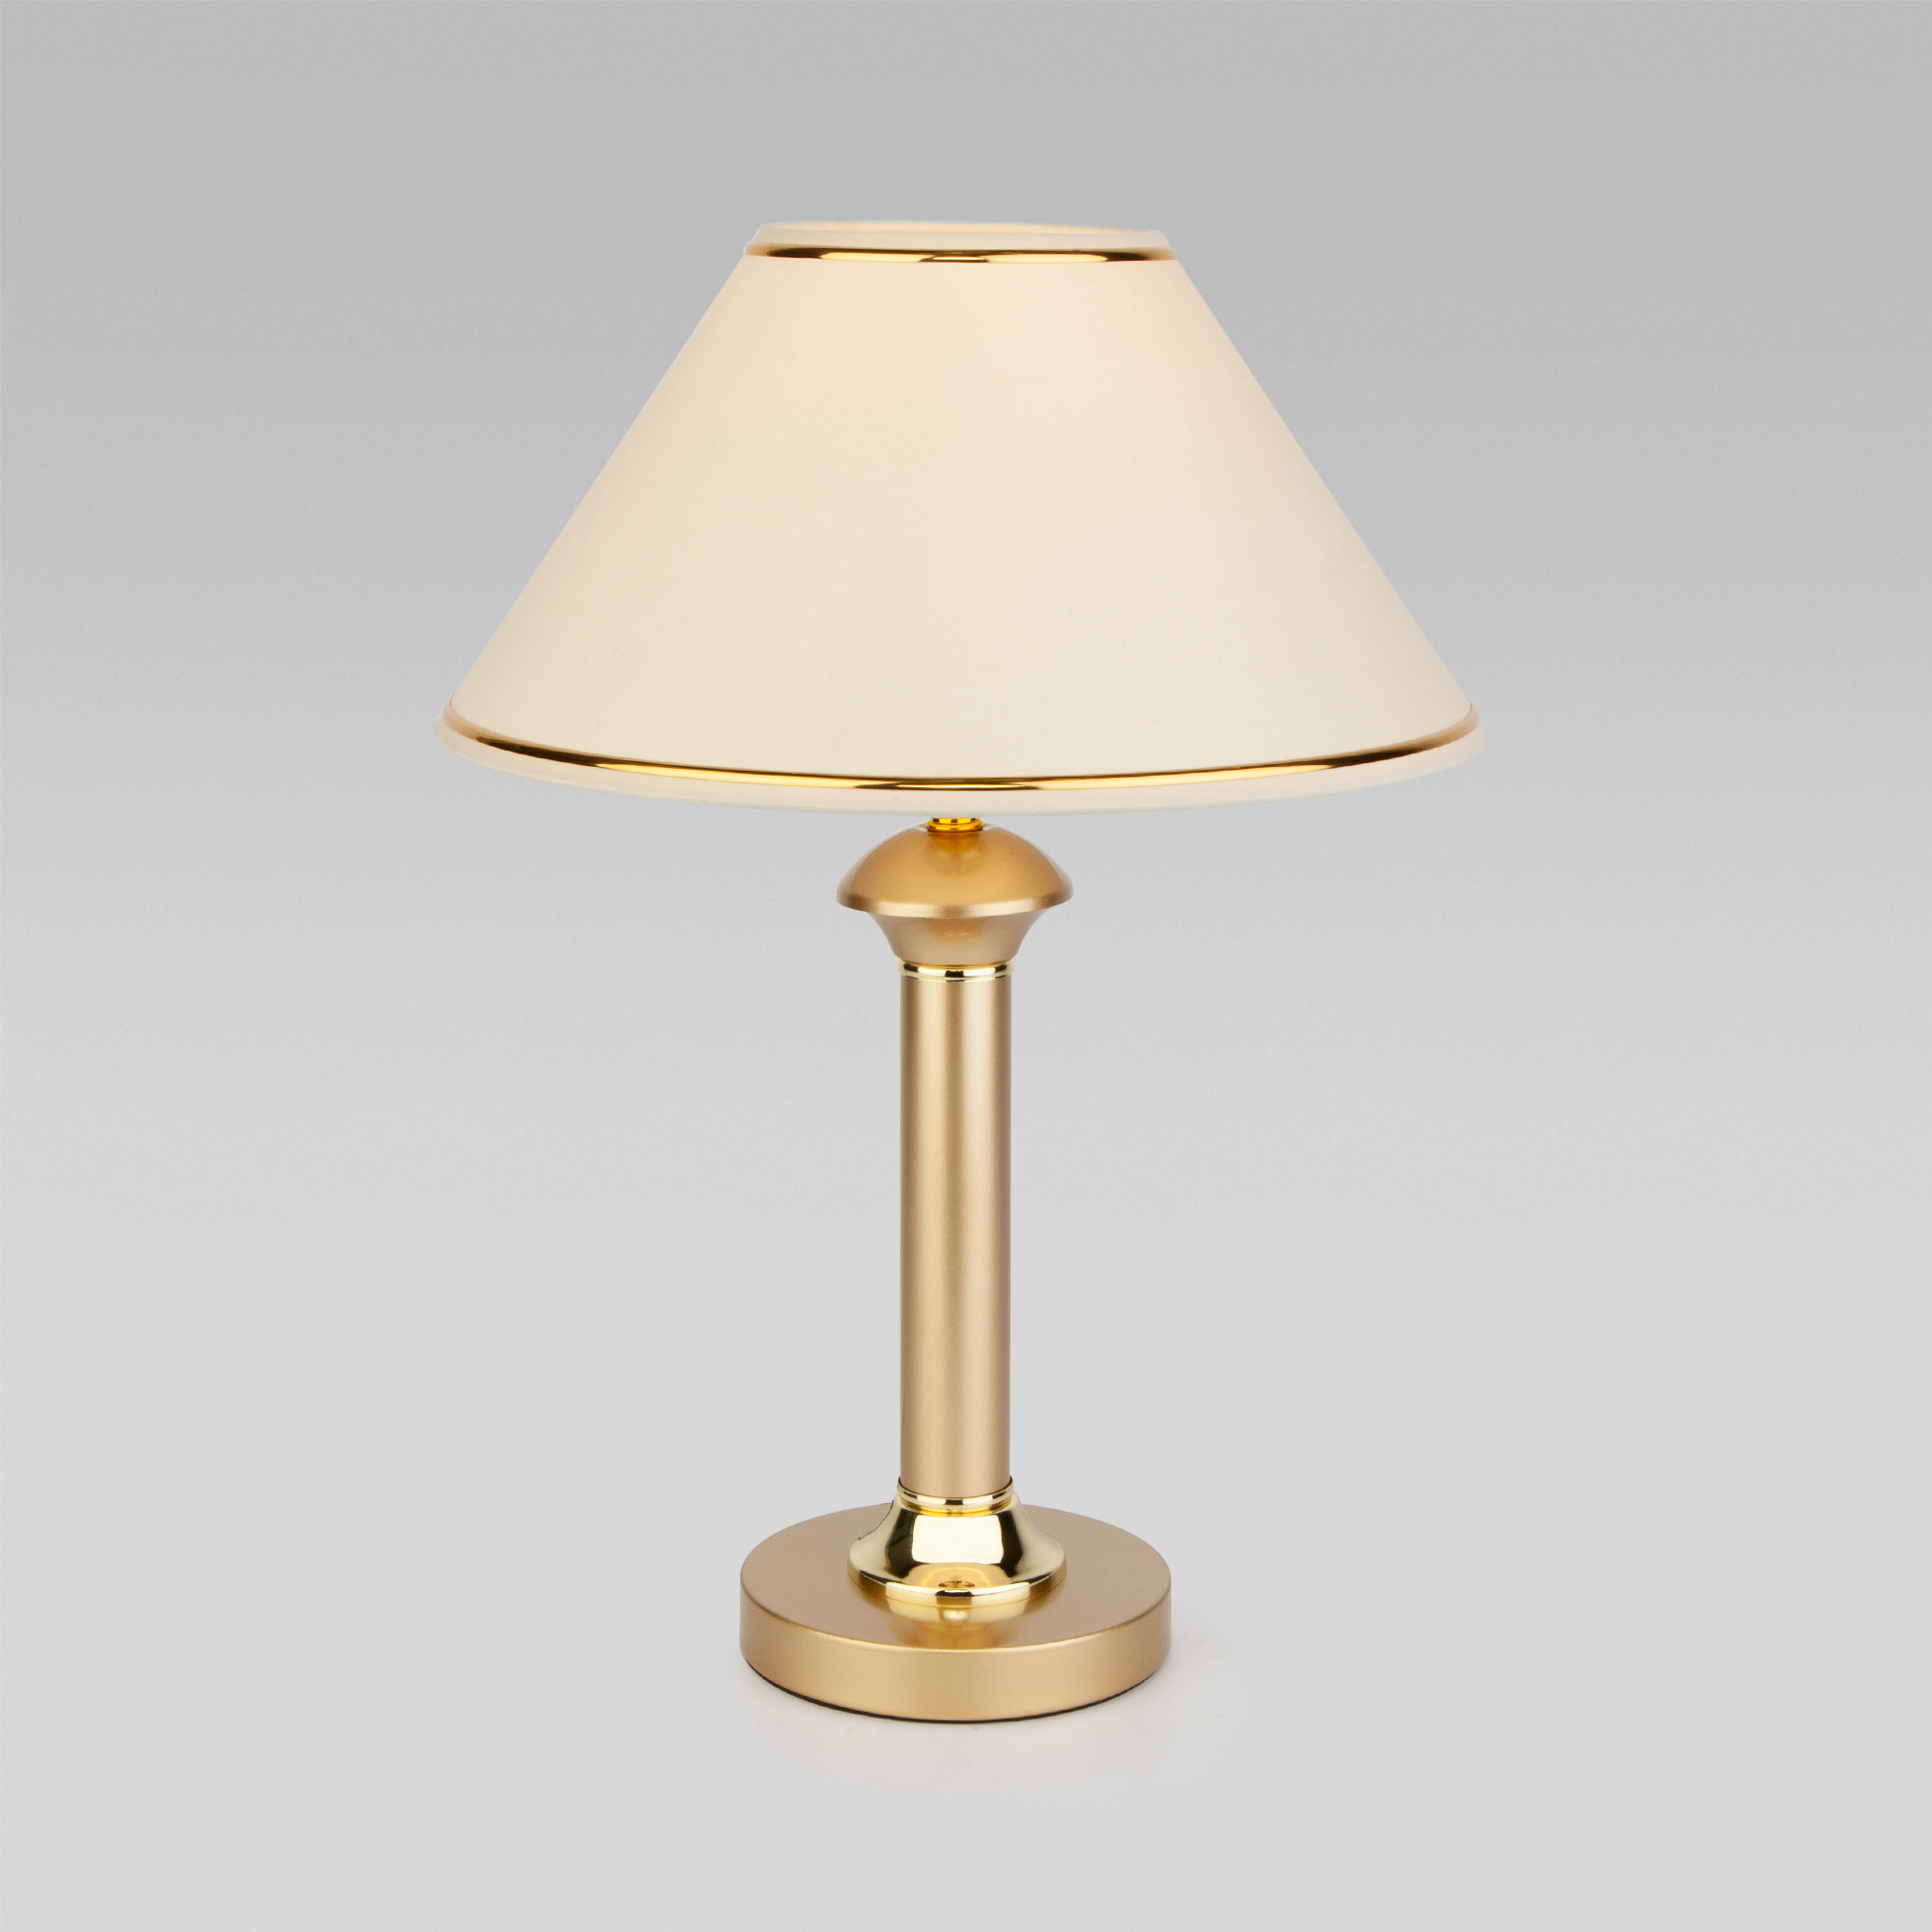 фото Настольная лампа с абажуром eurosvet 60019/1 перламутровое золото